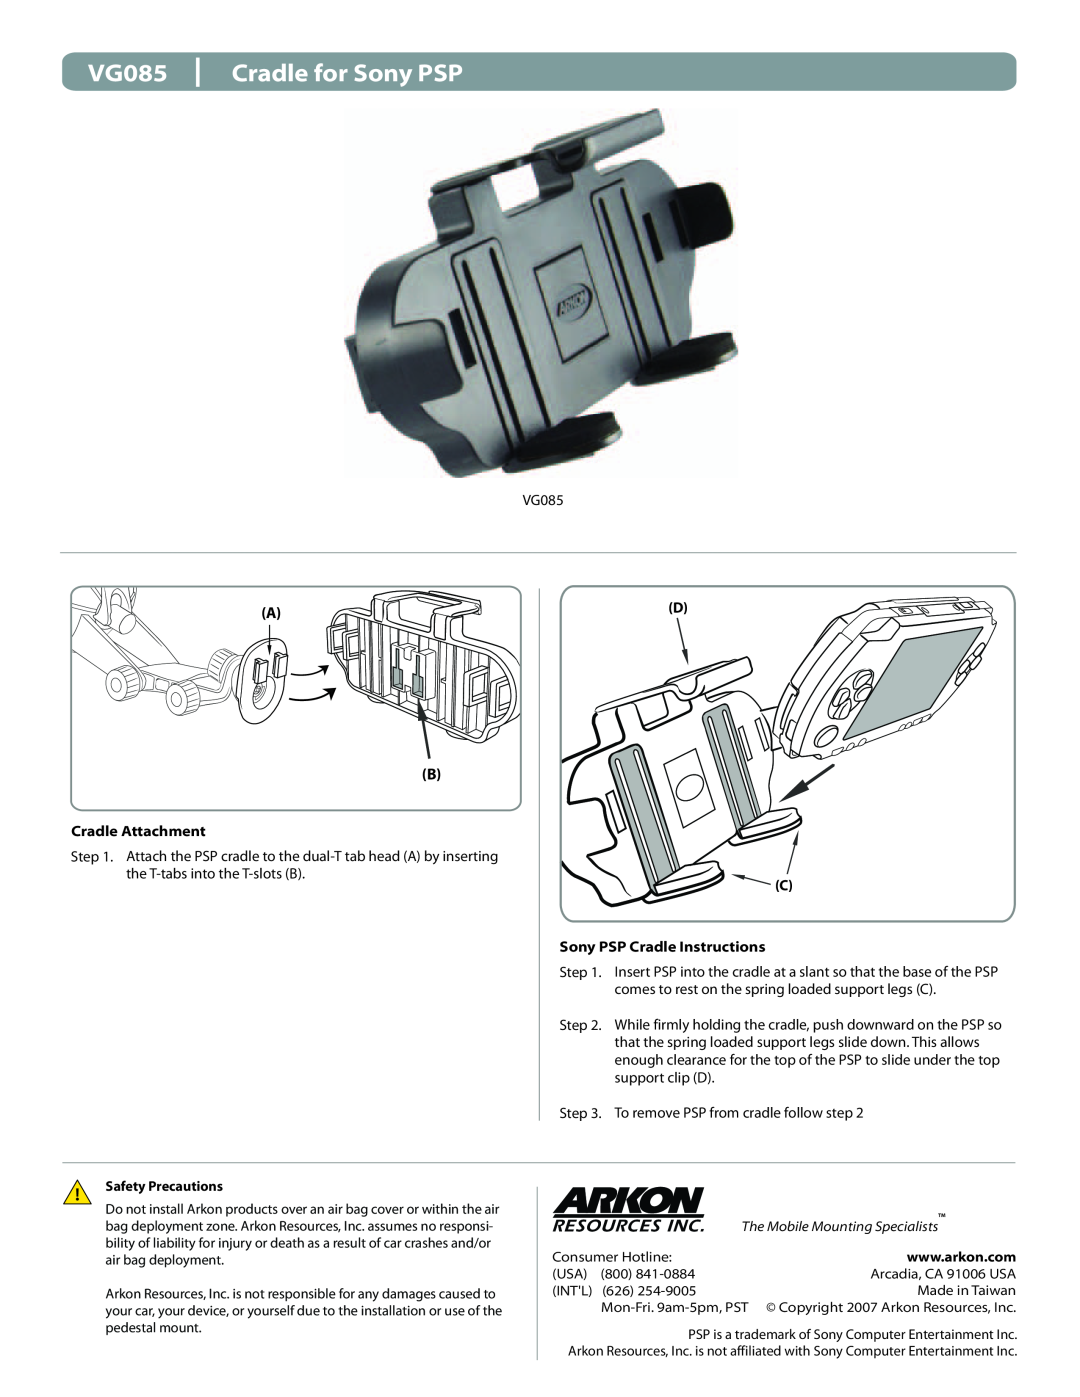 Black & Decker VG085 manual Cradle for Sony PSP, Cradle Attachment, D C Sony PSP Cradle Instructions, Safety Precautions 